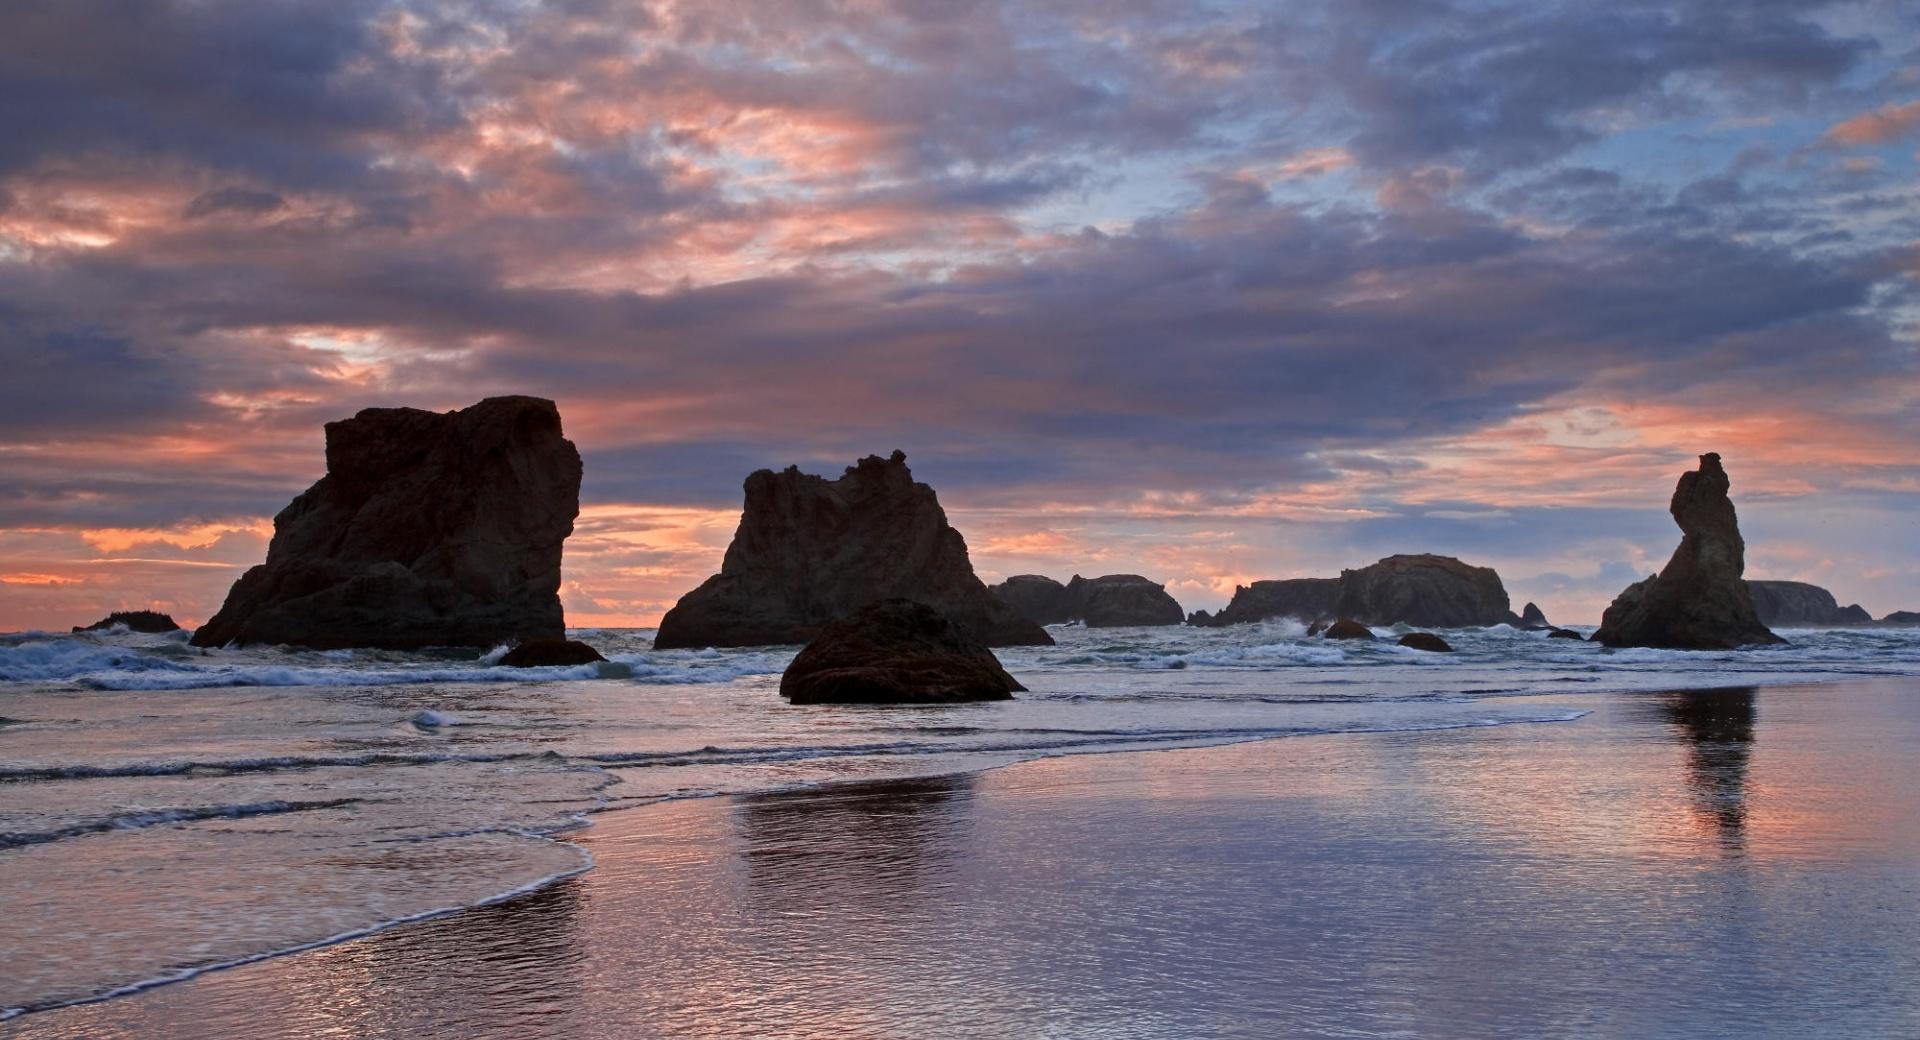 Sea Stacks At Sunset Bandon Oregon at 640 x 1136 iPhone 5 size wallpapers HD quality